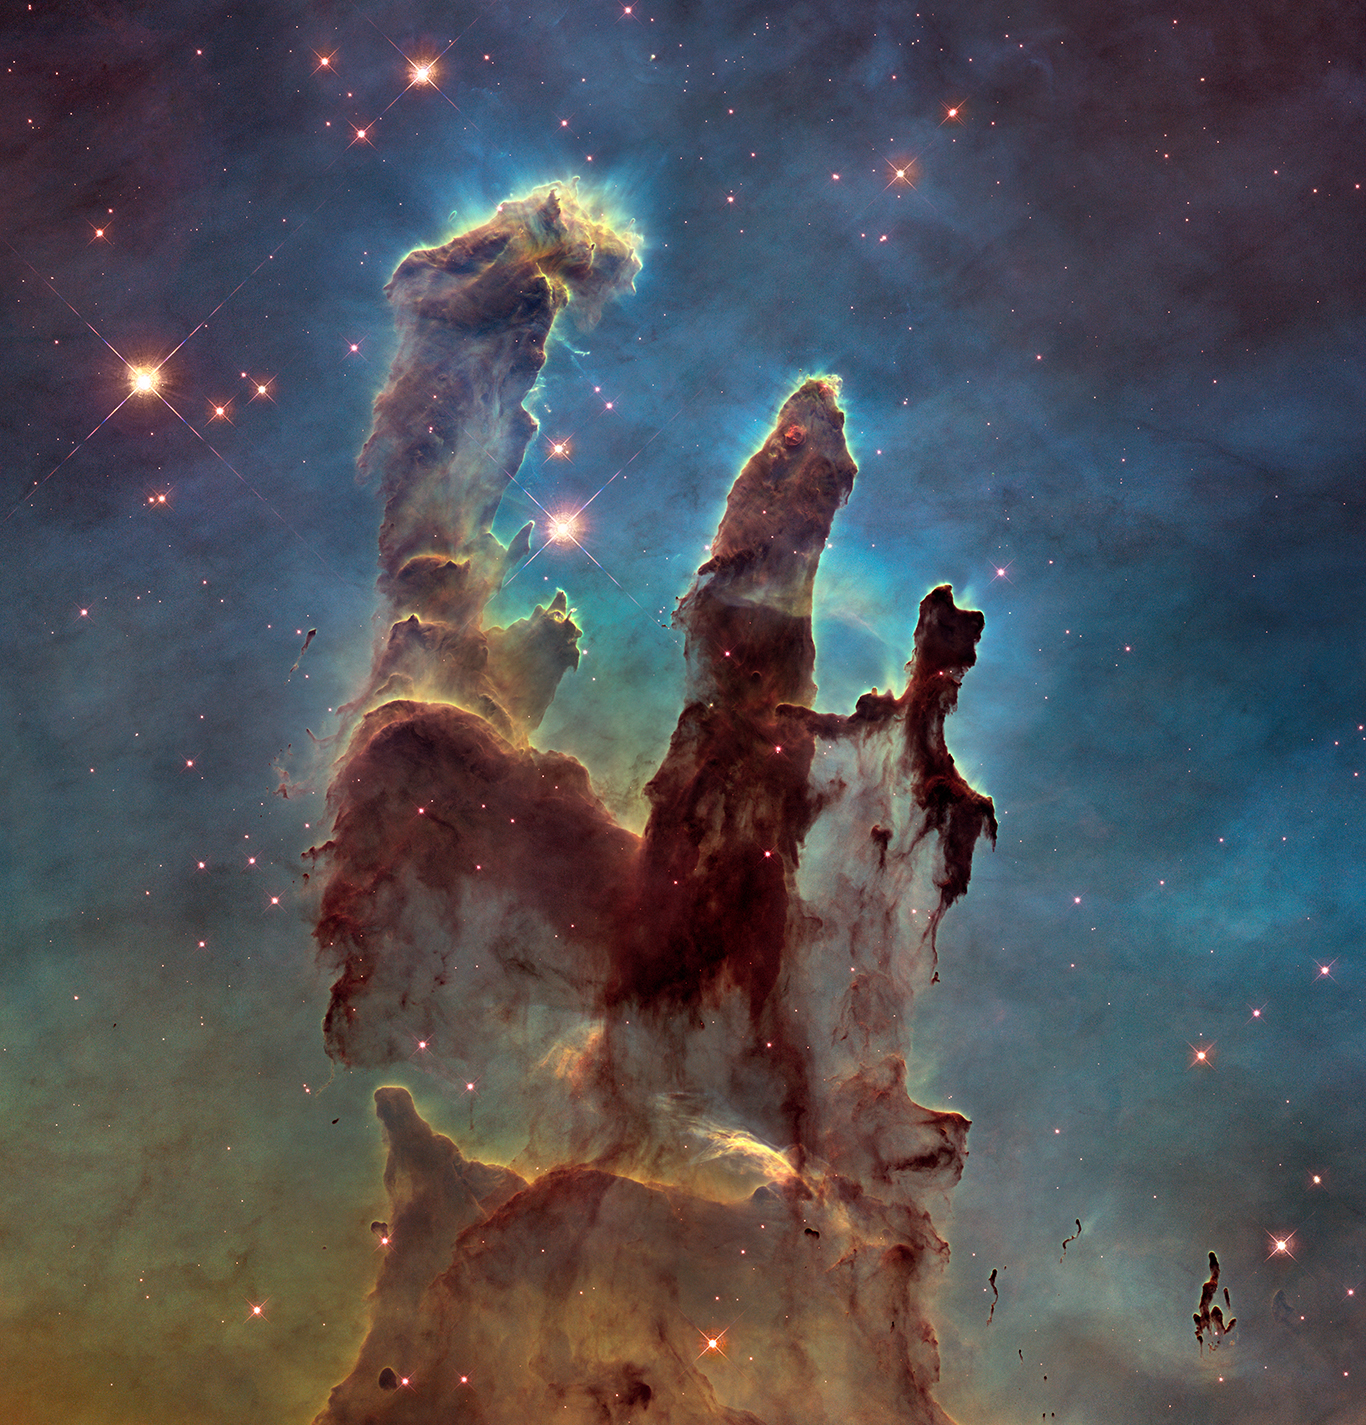 An image of the Pillars of Creation, a nebula that has three distinct pillars shooting upward.